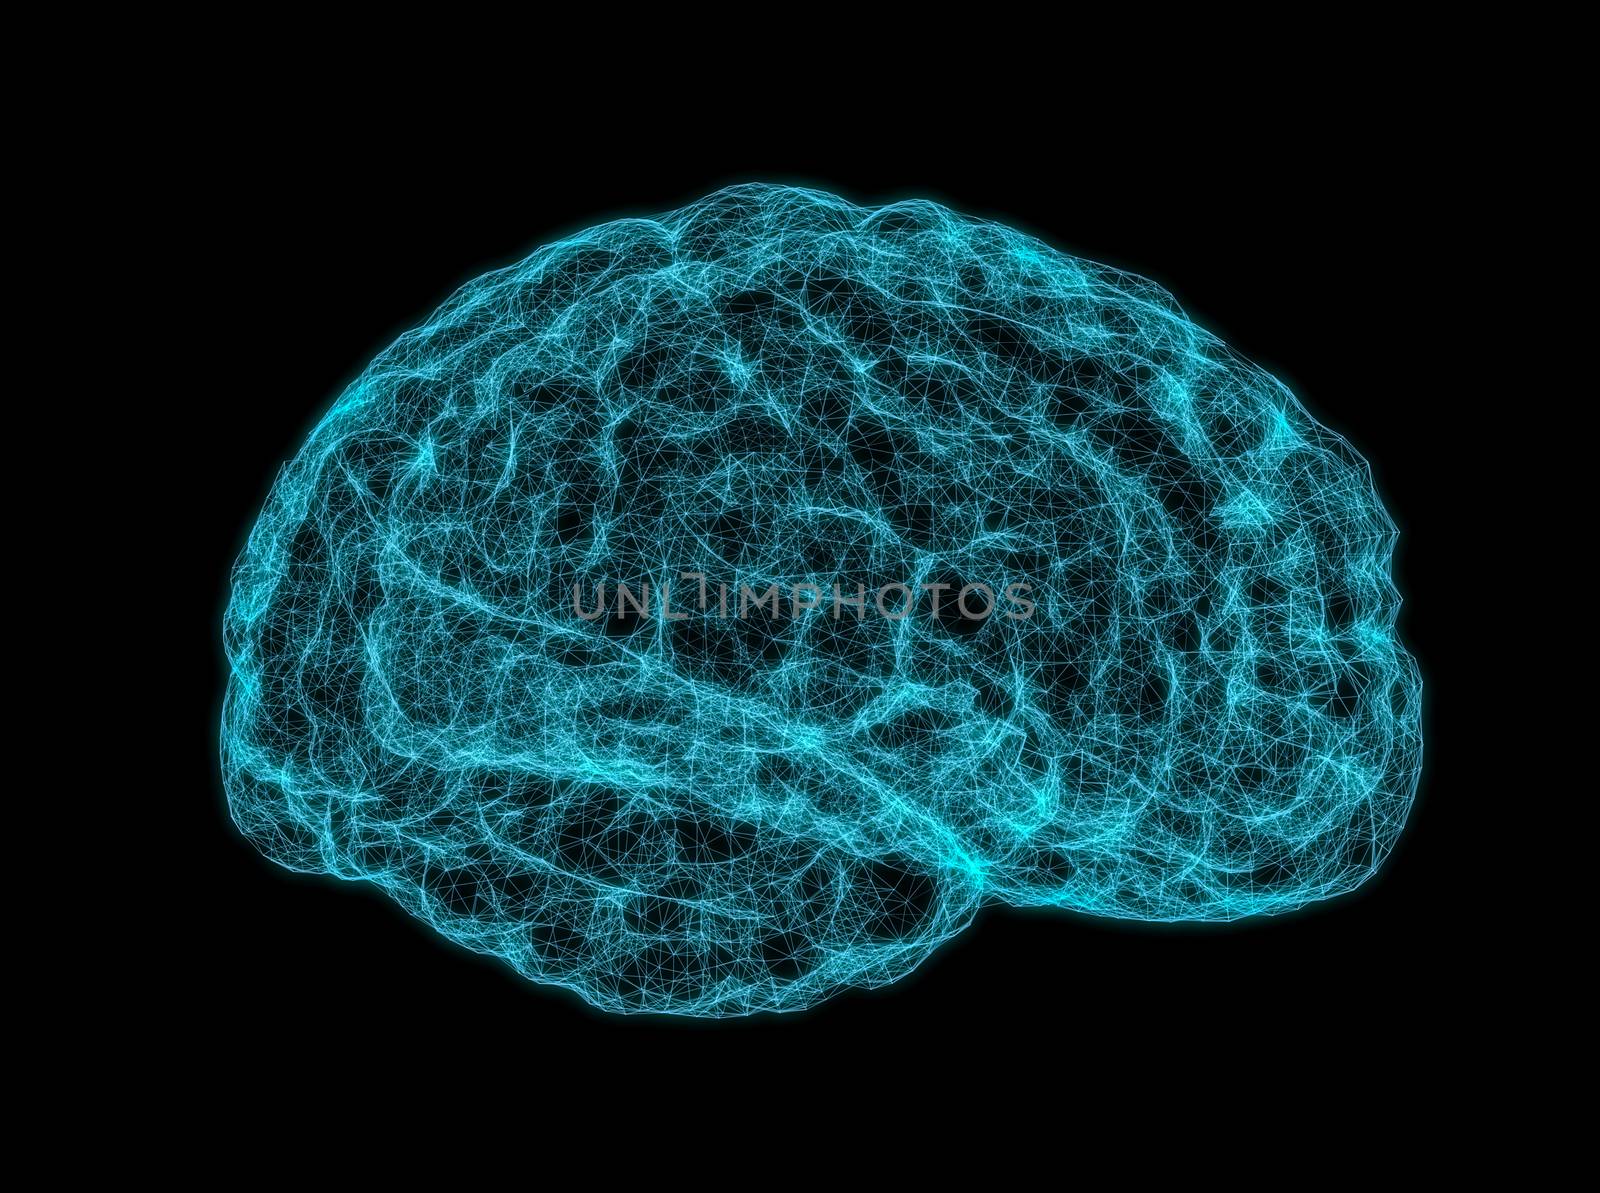 X-ray image of human brain by cherezoff